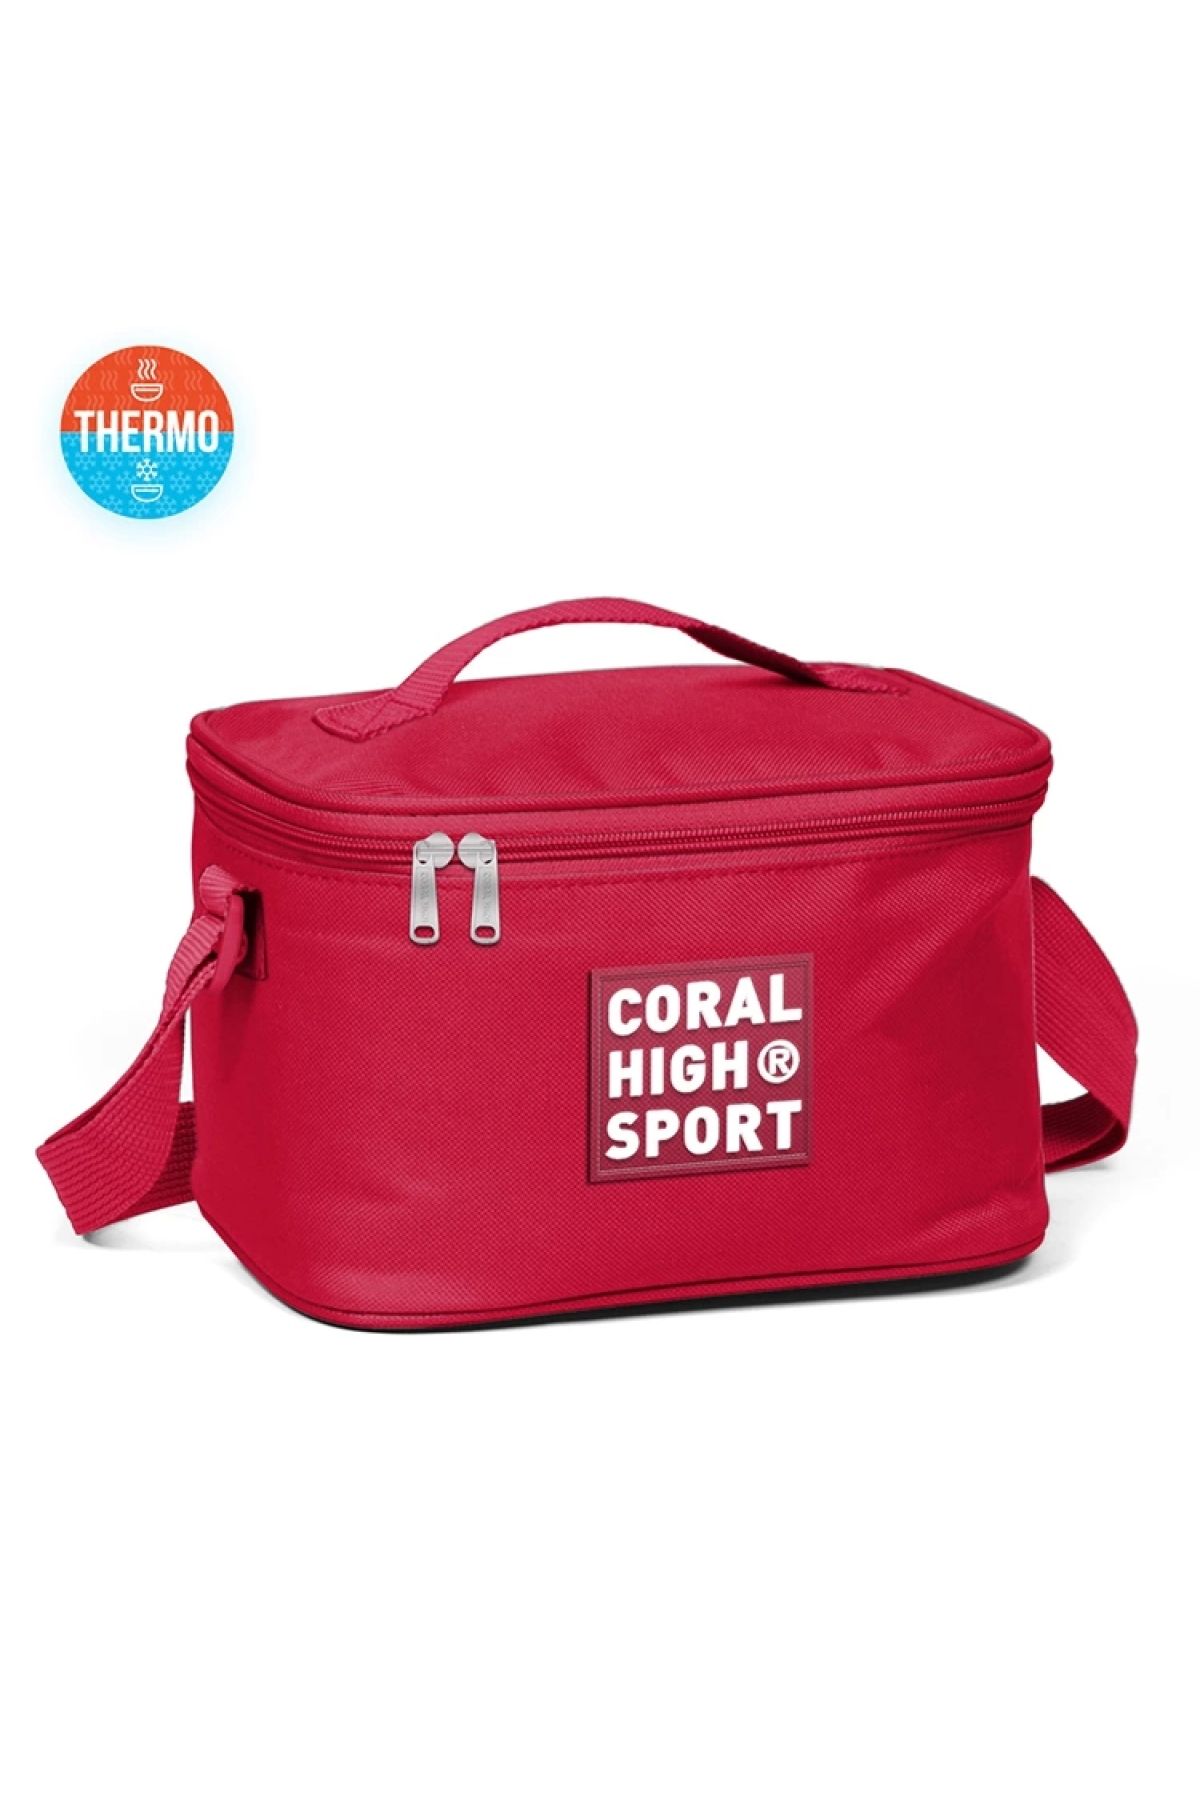 Coral High Sport 22896 Beslenme Çantası (thermo) Kırmızı